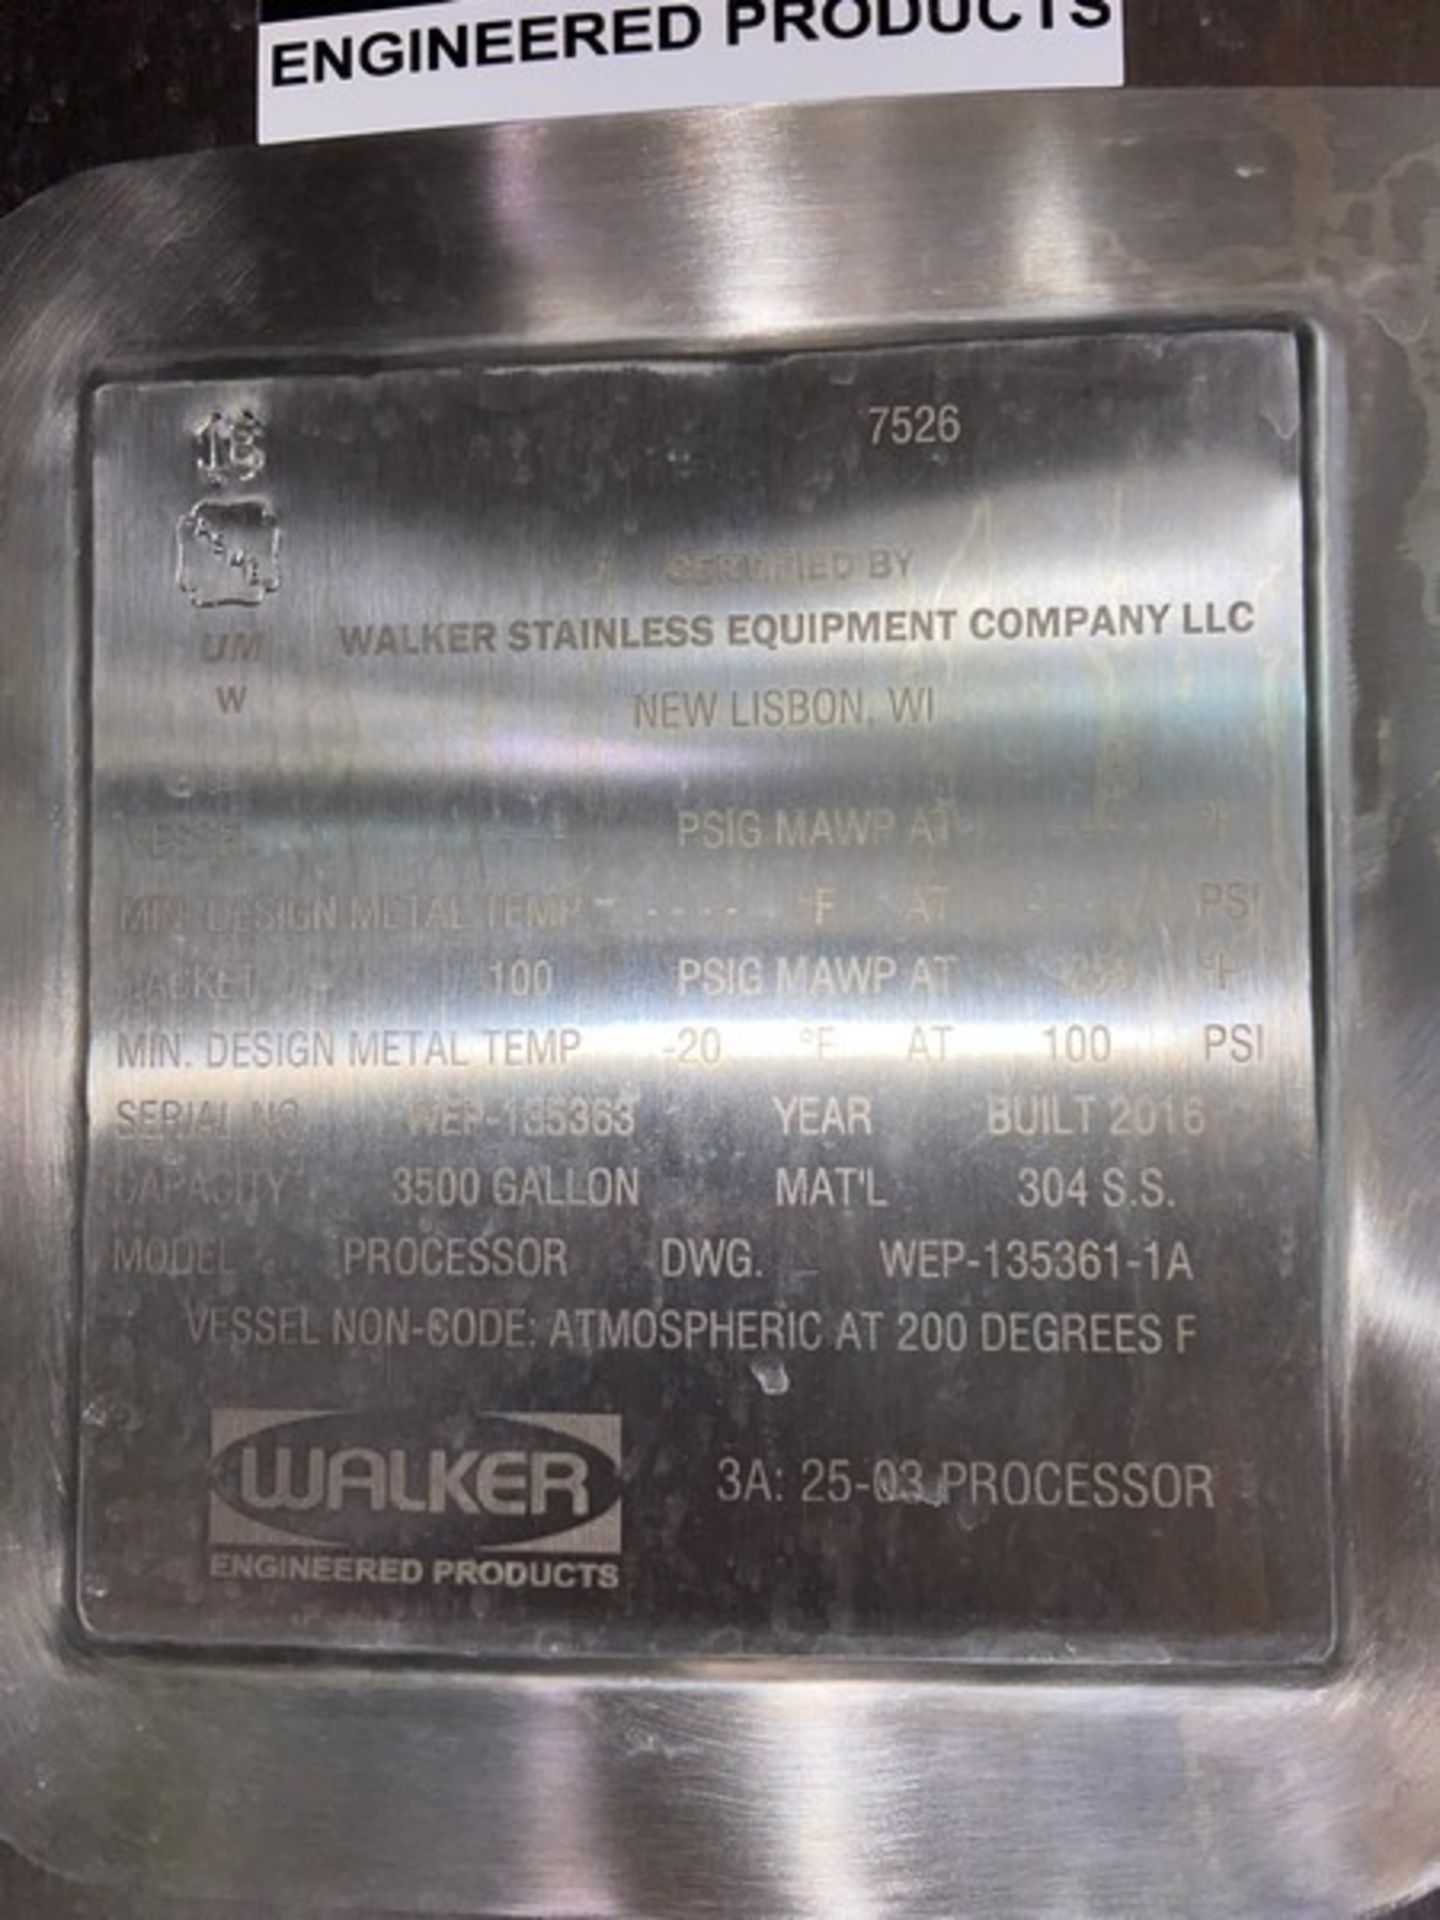 2016 Walker 3,500 Gal. S/S Jacketed Processors, M/N PROCESSOR DWG. WEP-1353361-1A, S/N WEP-135363, - Image 6 of 14